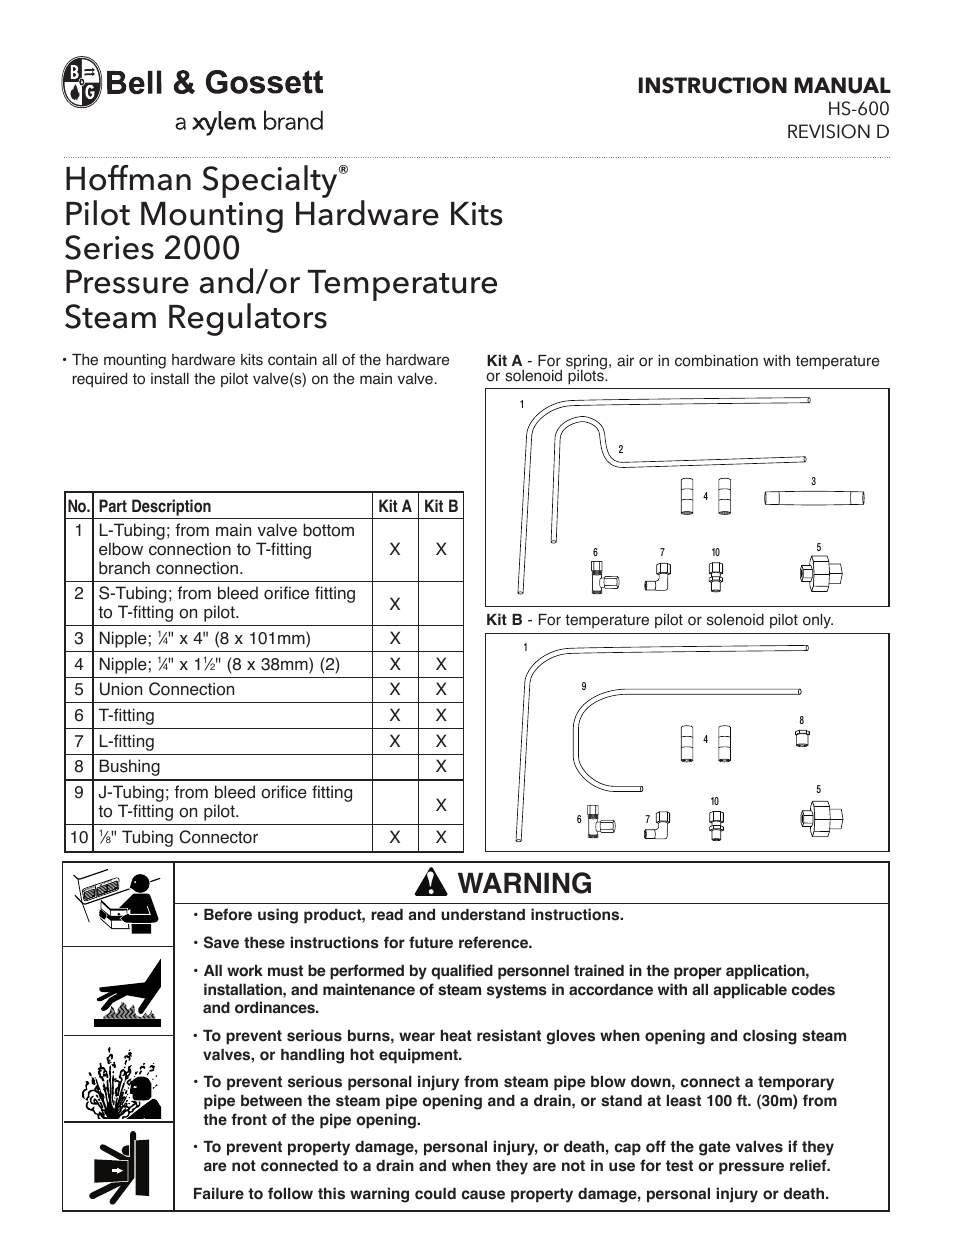 HS 600D Pilot Mounting Hardware Kits Series 2000 Pressure and/or Temperature Steam Regulators